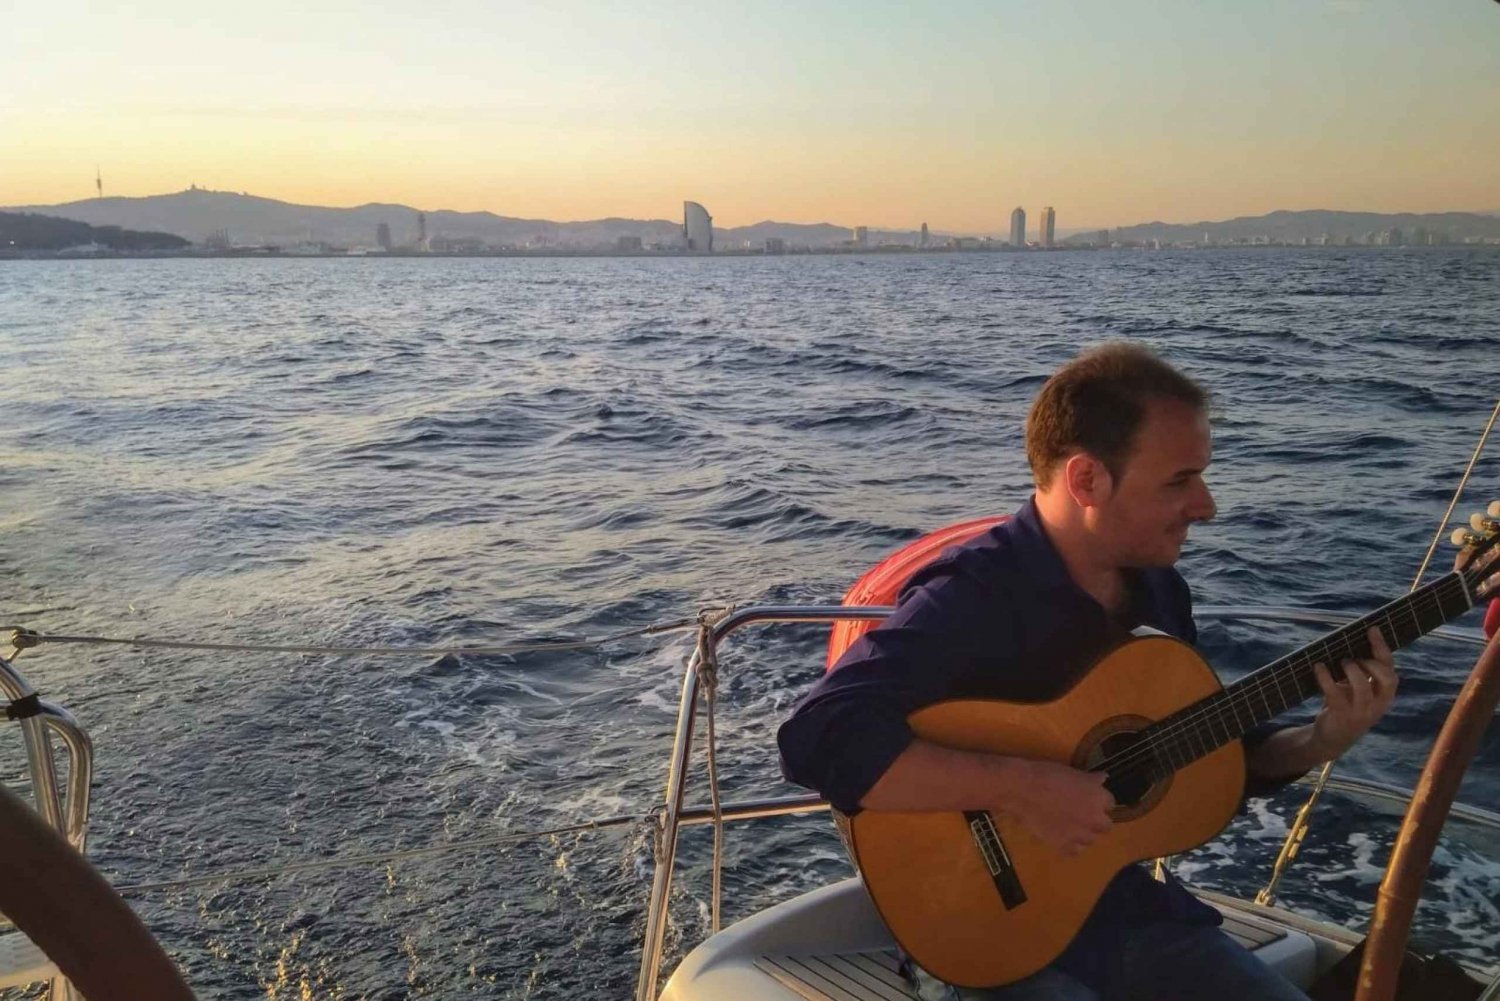 Barcelona: Experiencia de navegación al atardecer con música de guitarra en directo